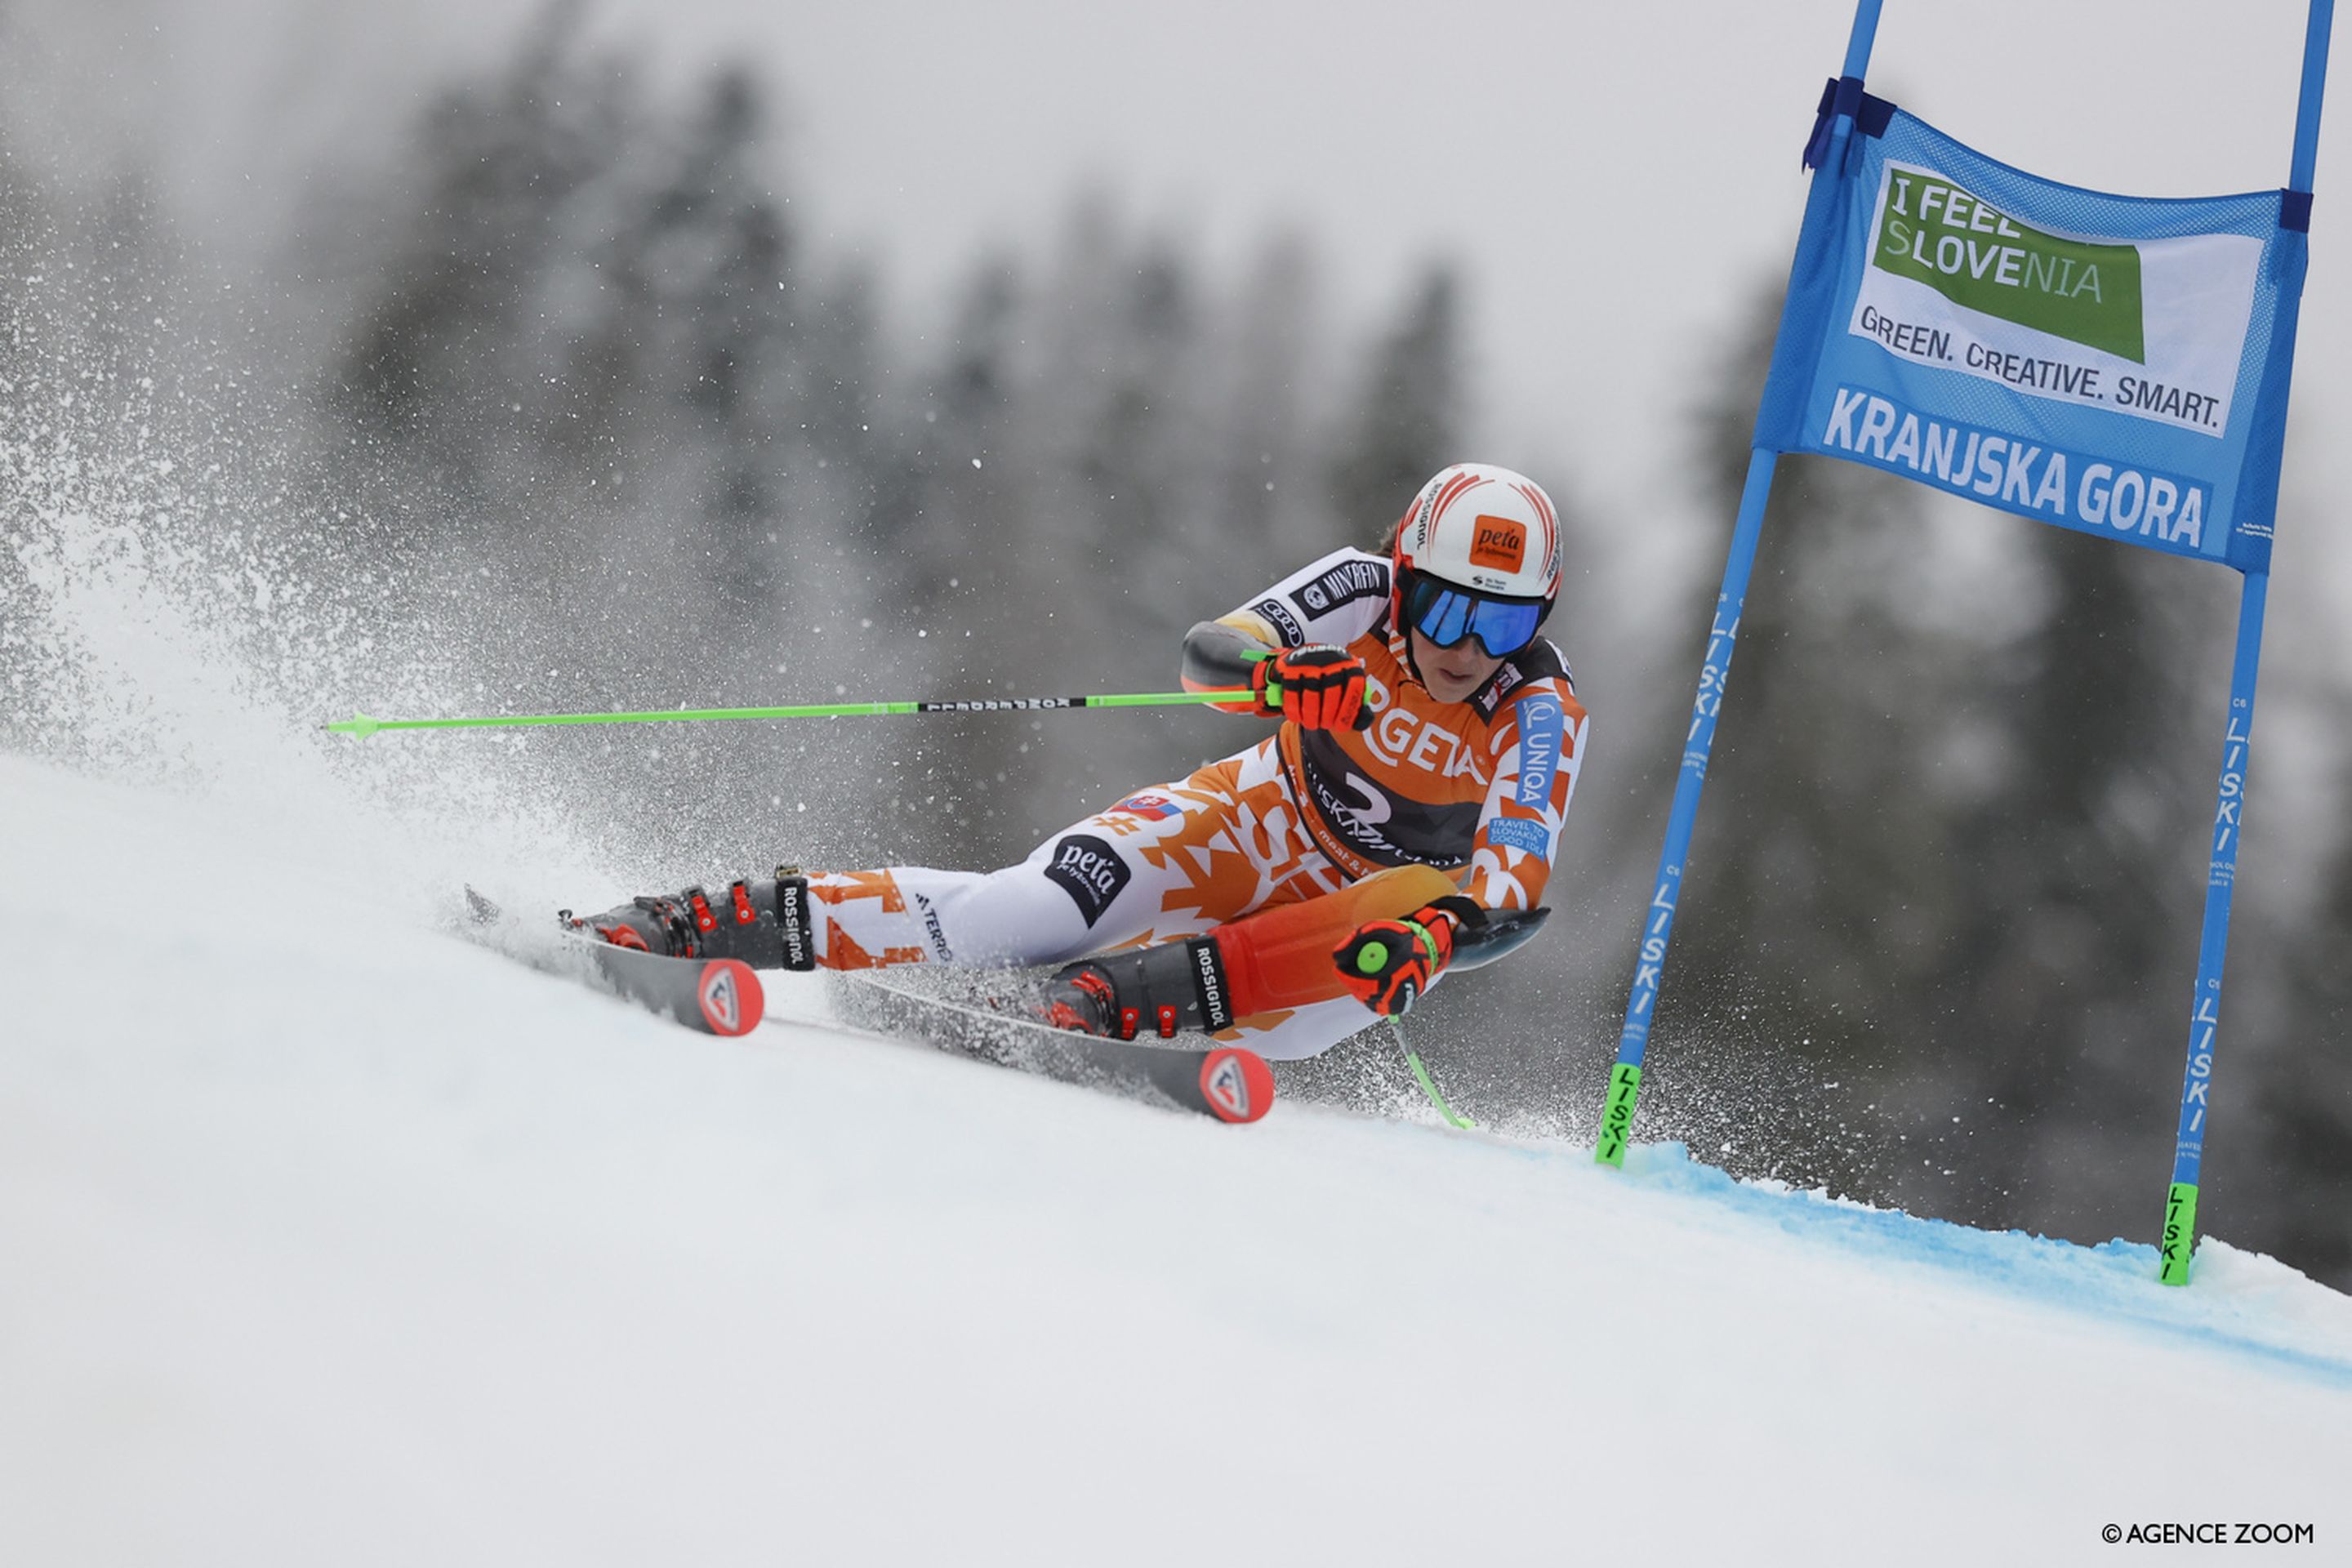 Vlhova and Shiffrin will go head-to-head in Sunday's slalom in Kranjska Gora (@Agence Zoom)